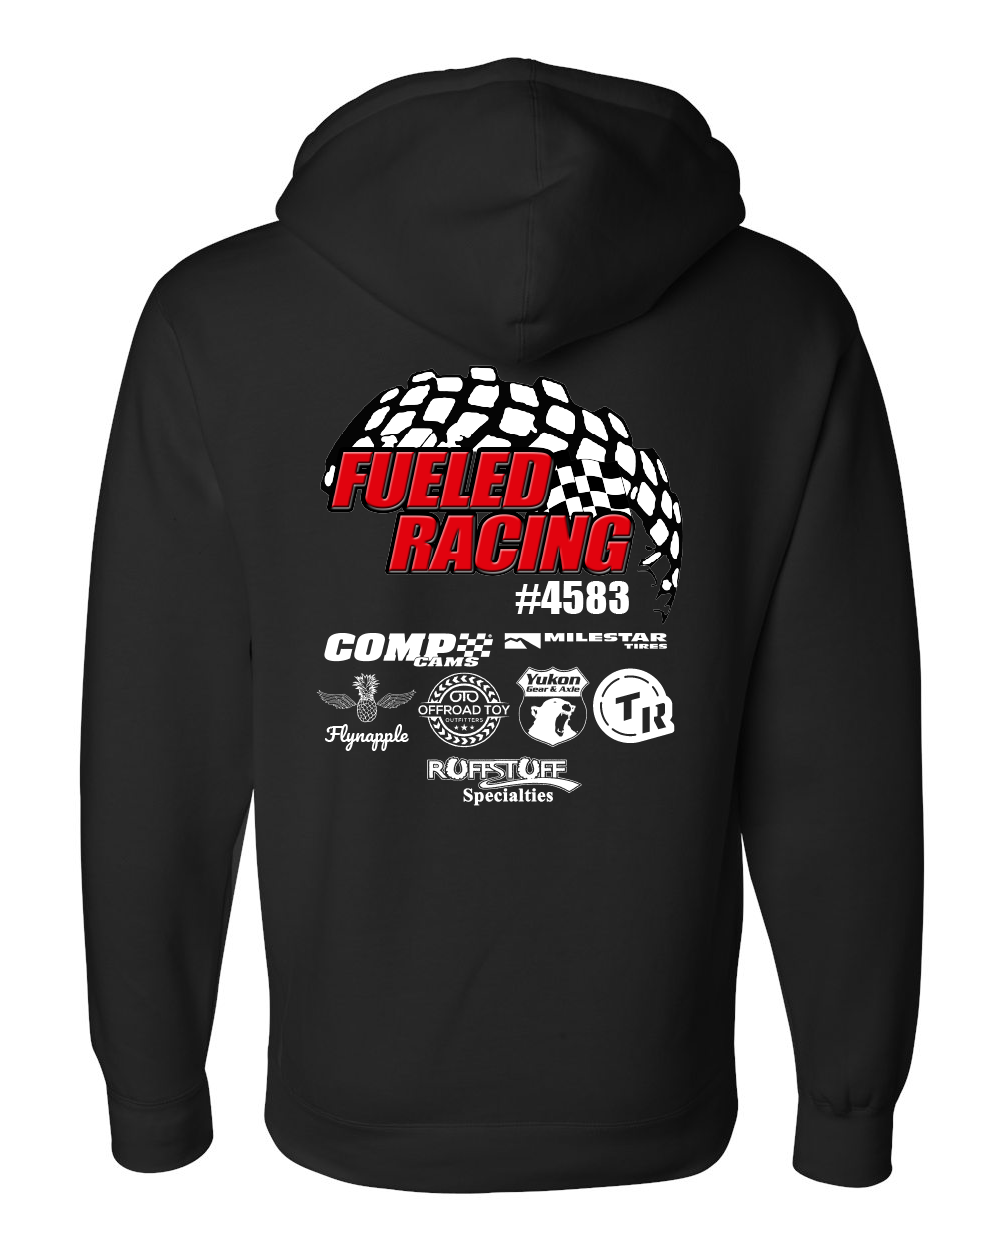 Fueled Racing #4583